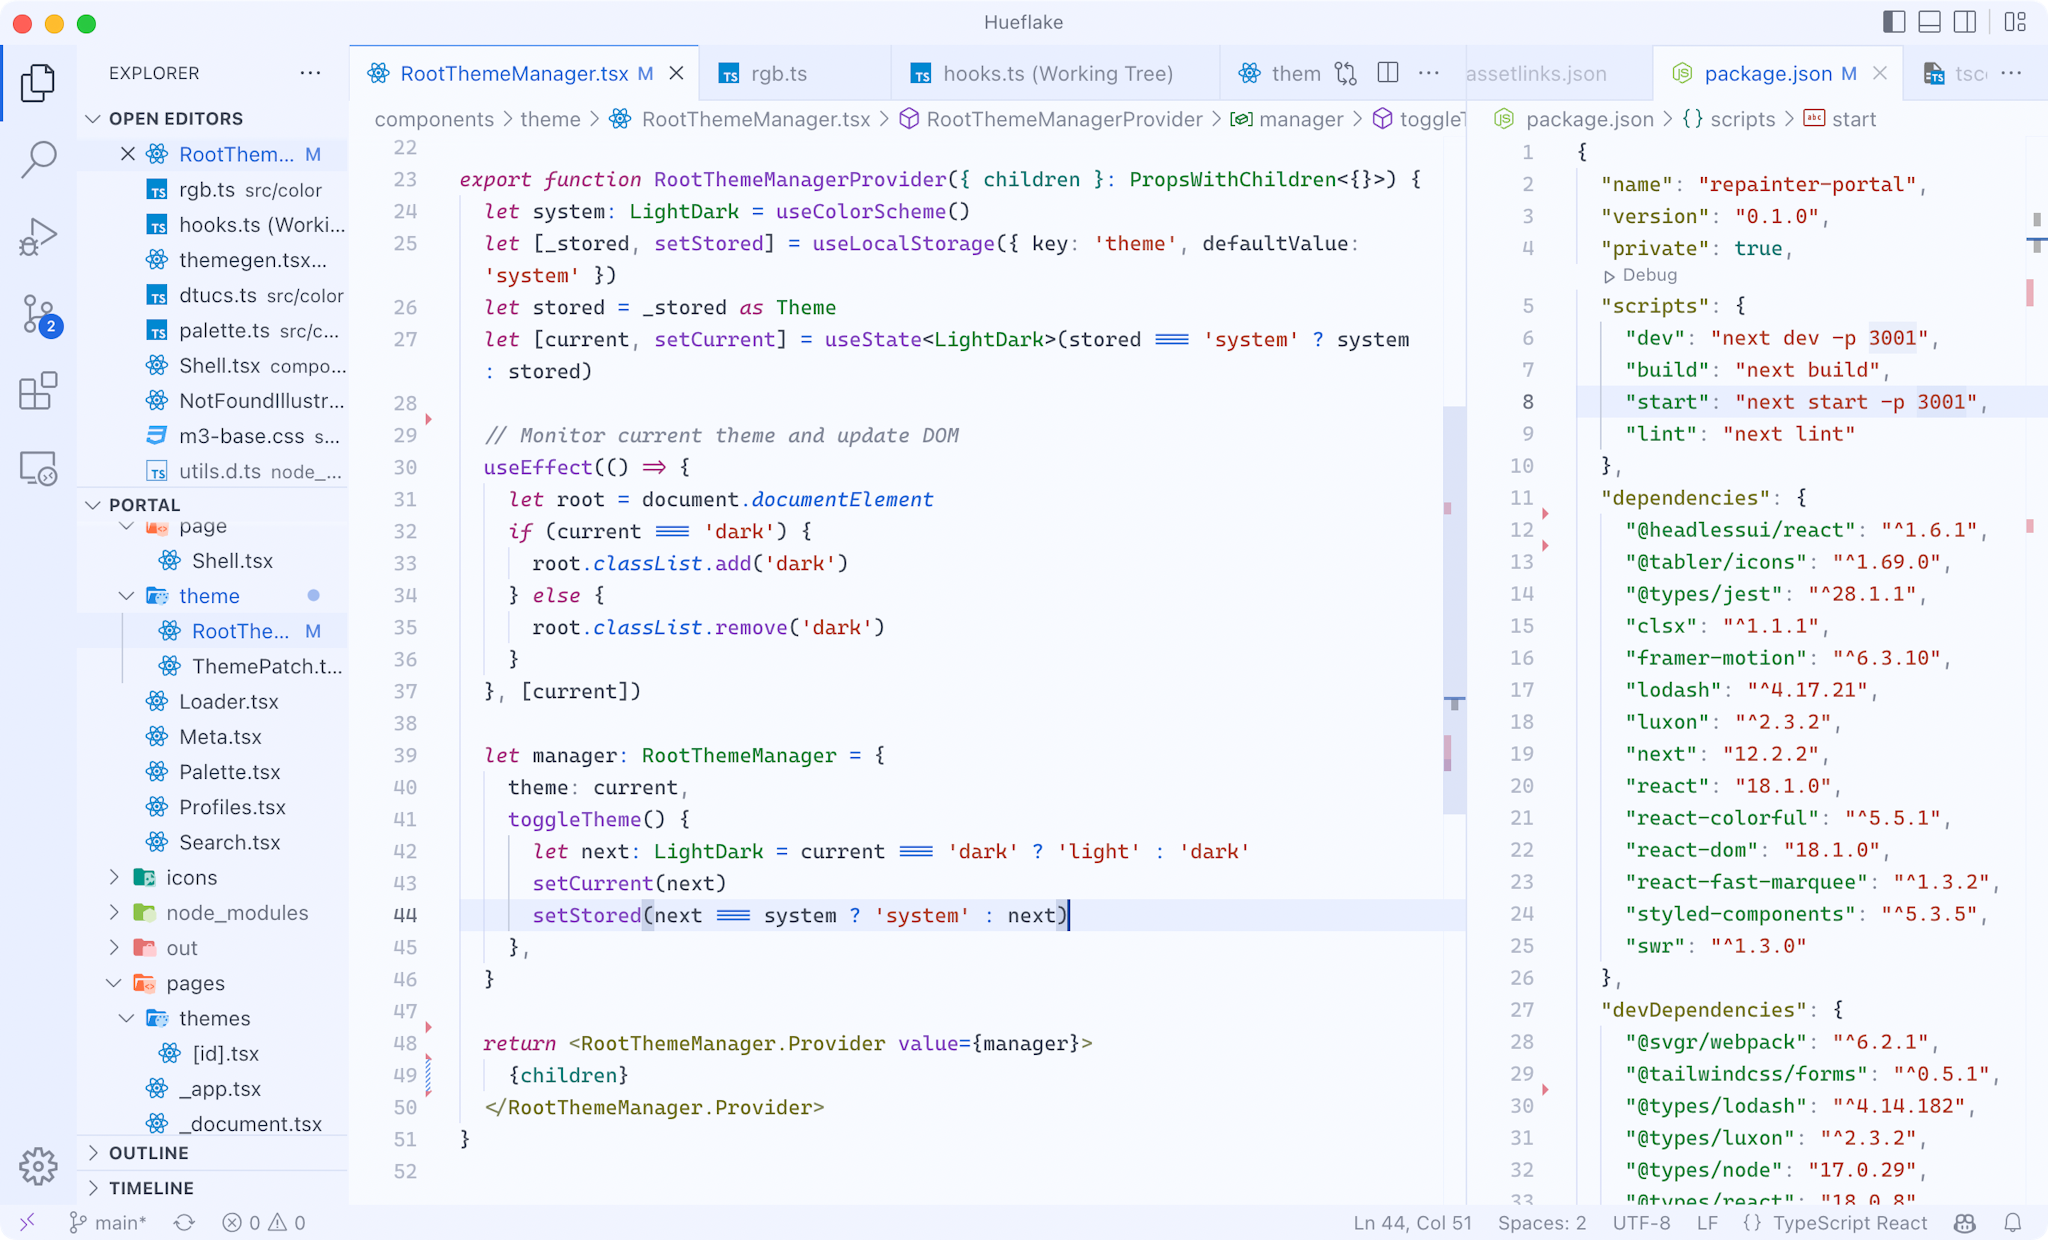 Screenshot of Visual Studio Code with a Hueflake theme